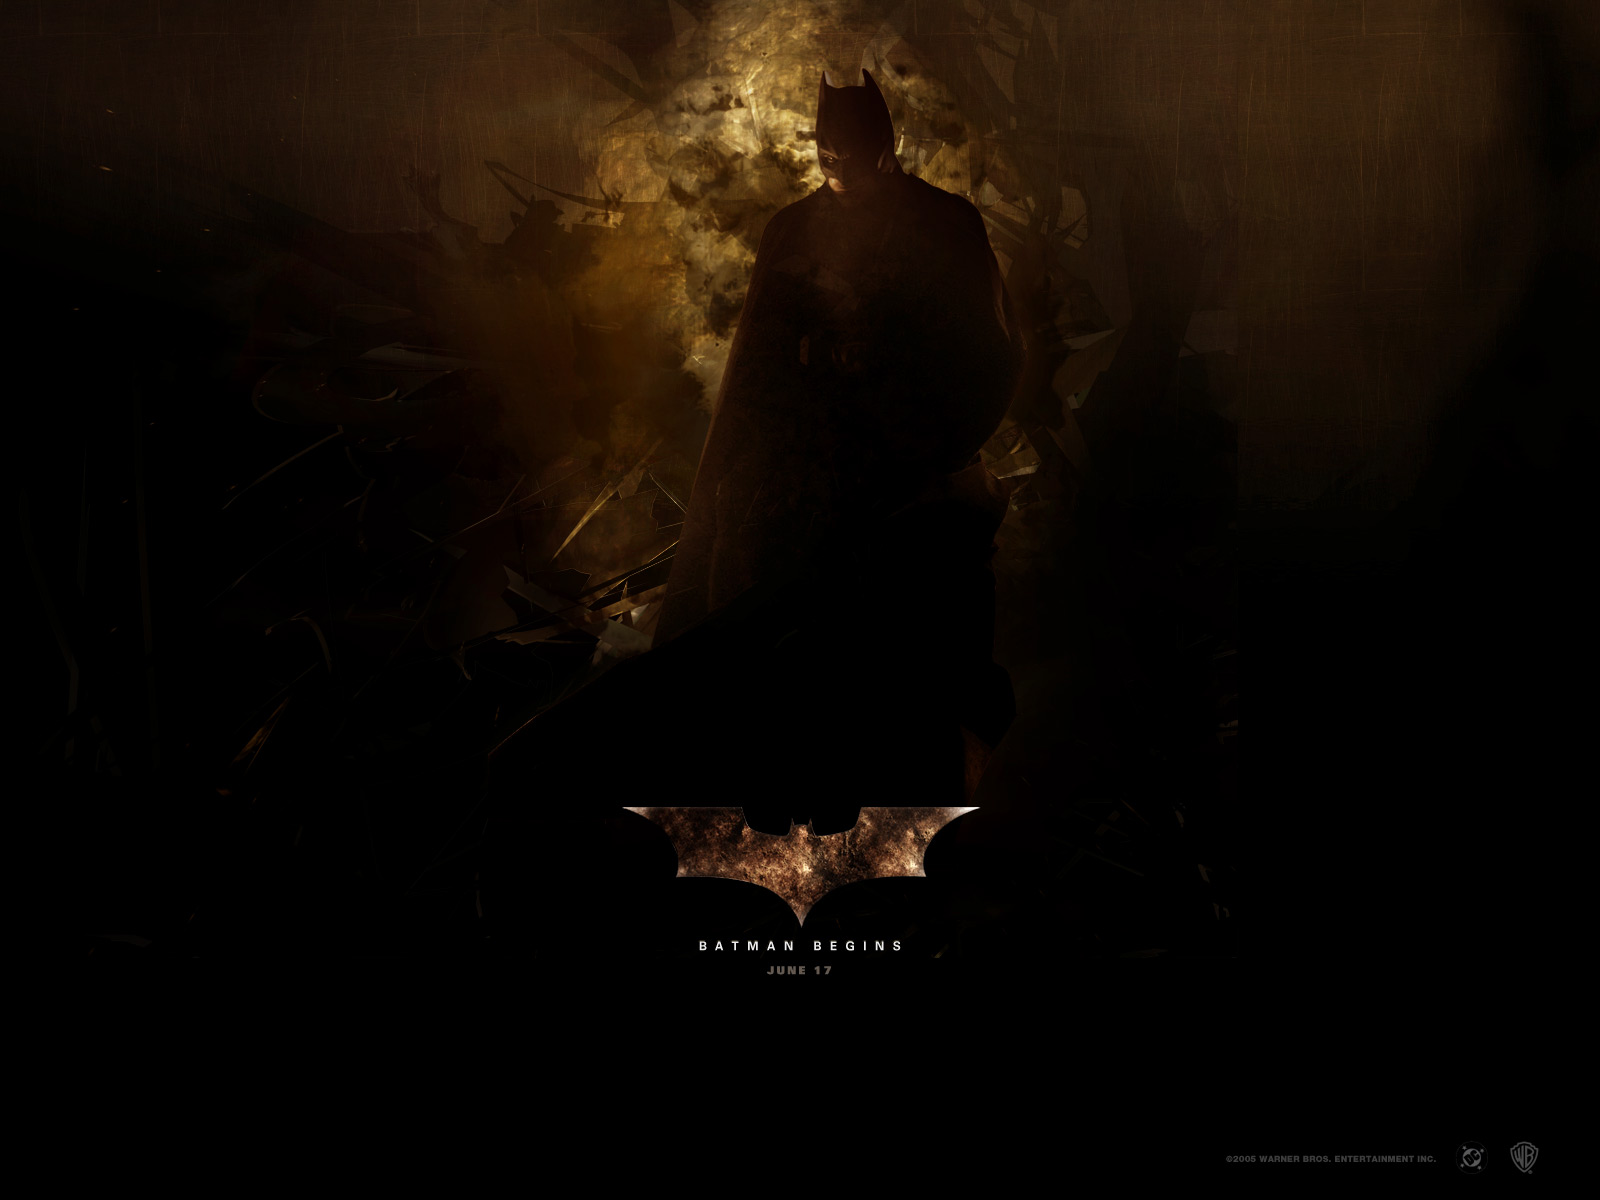 You are viewing the movie batmanbegins wallpaper named Batman 